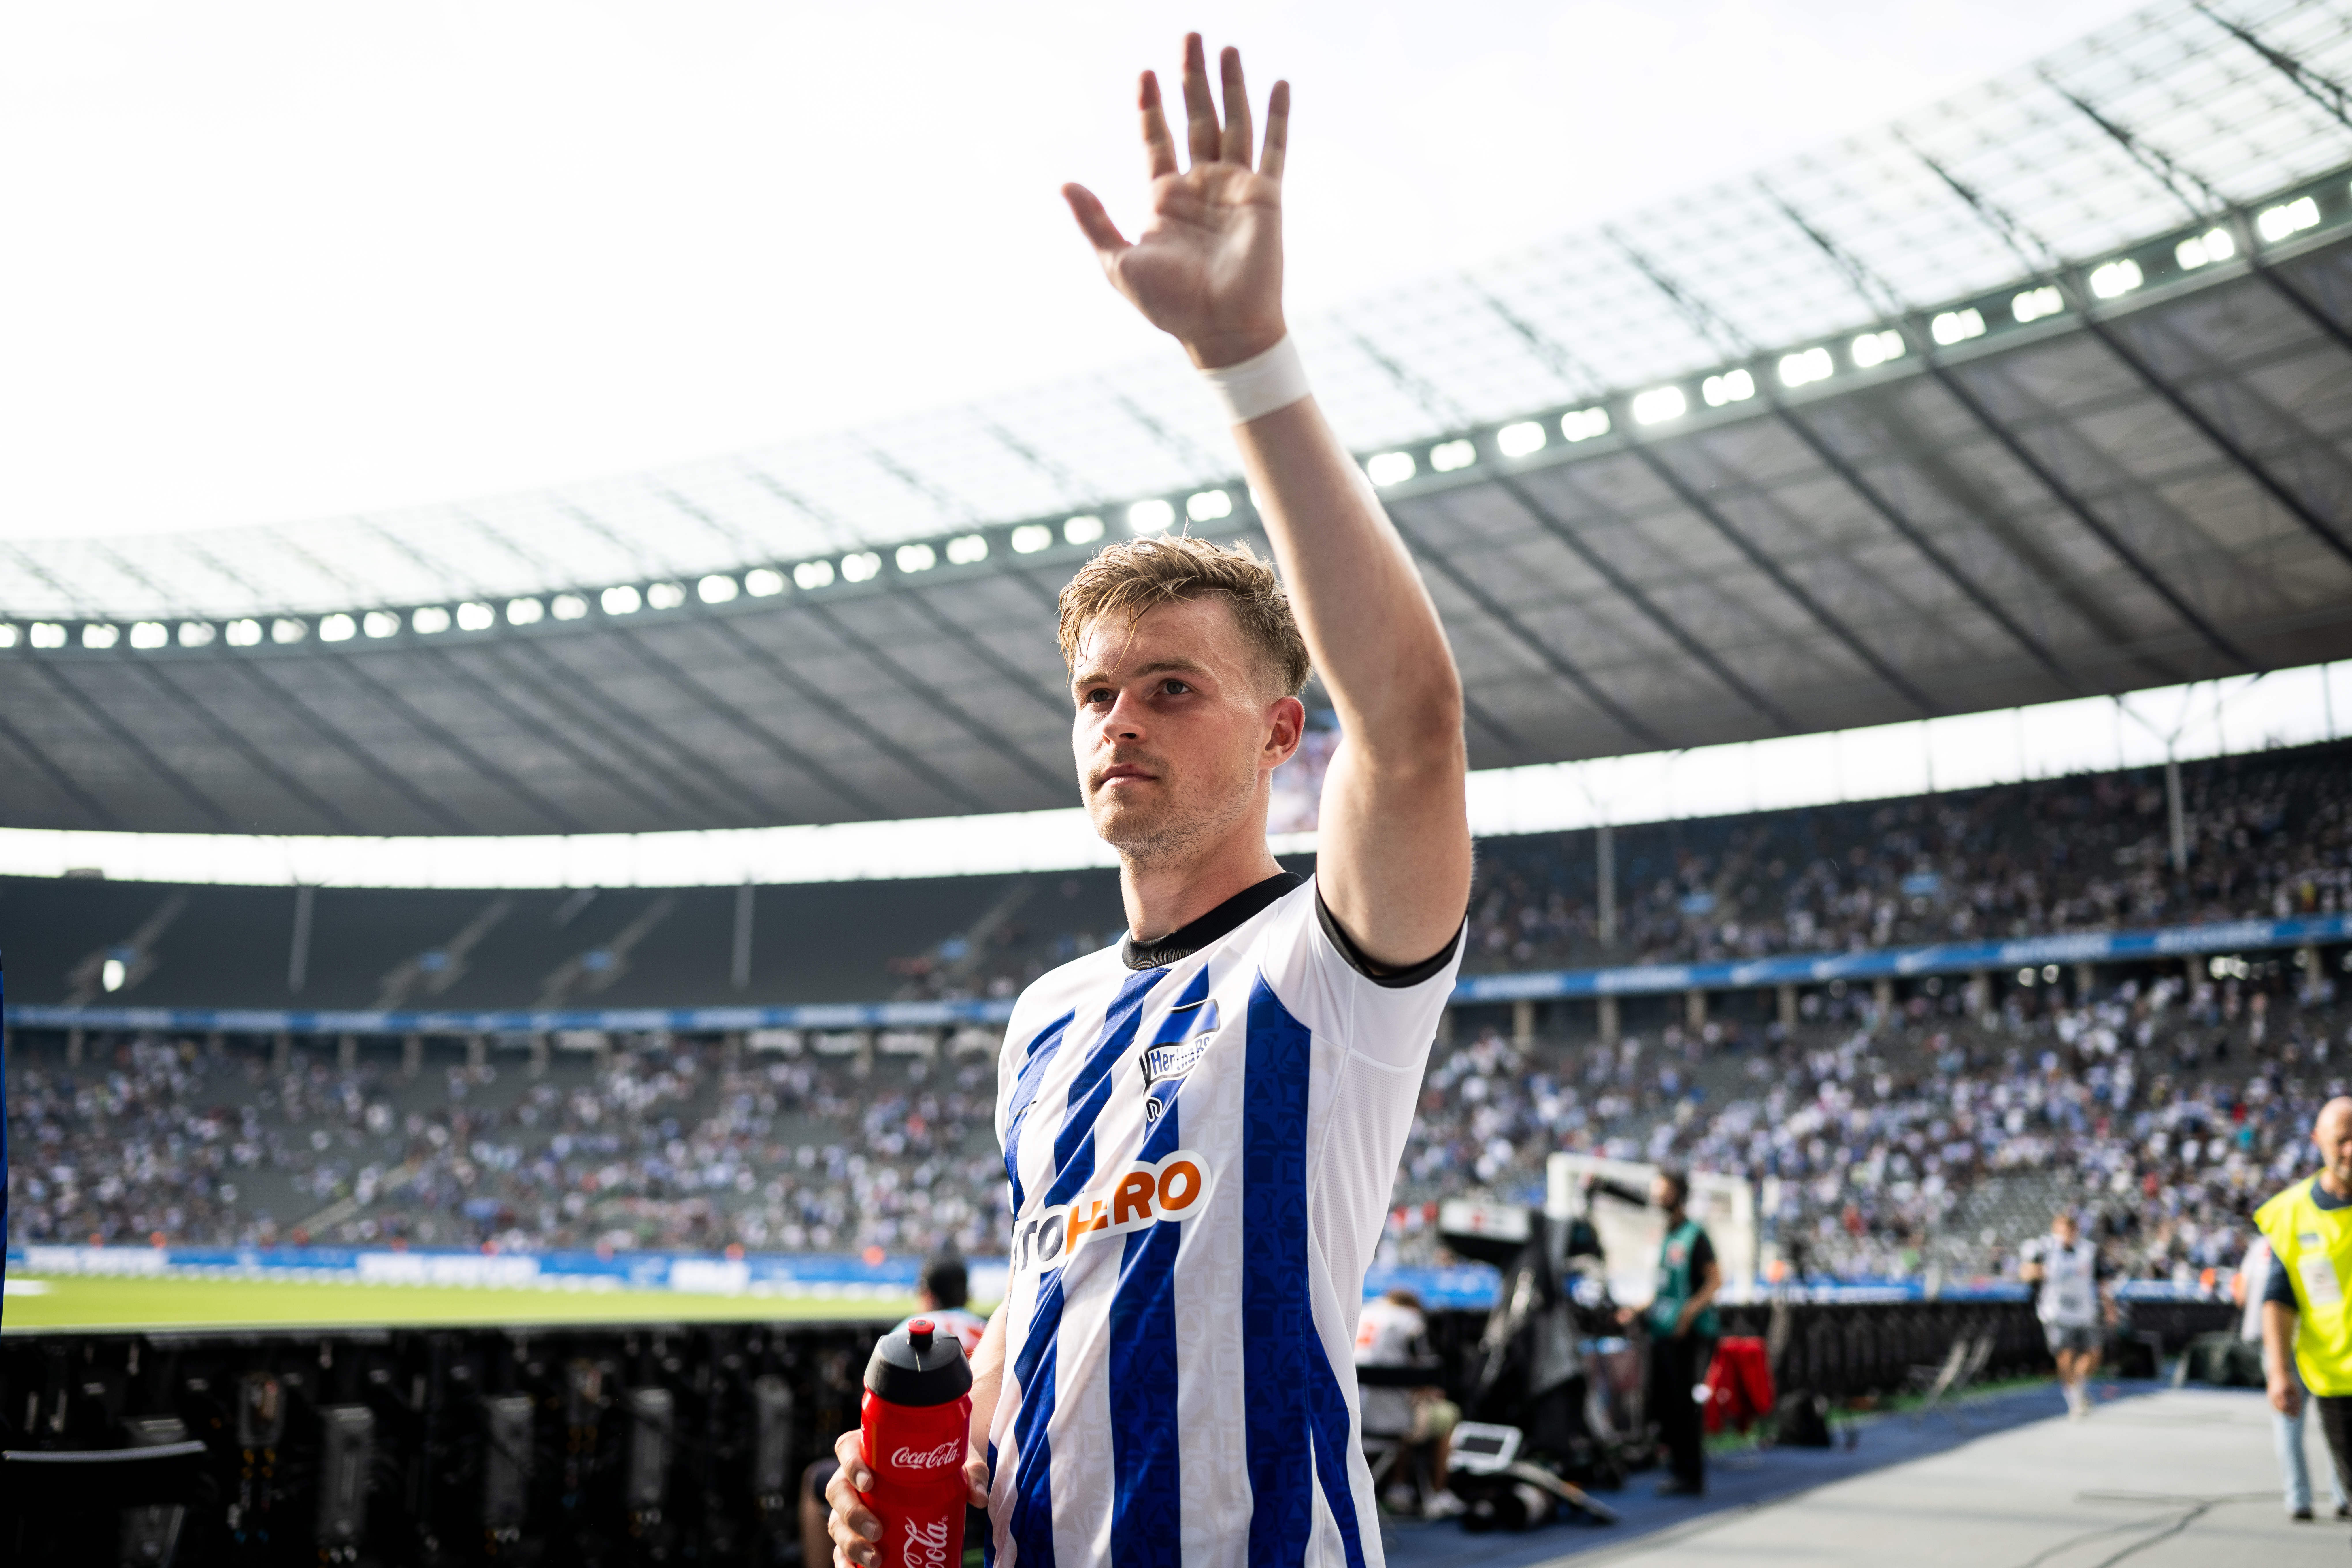 Maxi Mittelstädt waves to the Hertha fans.